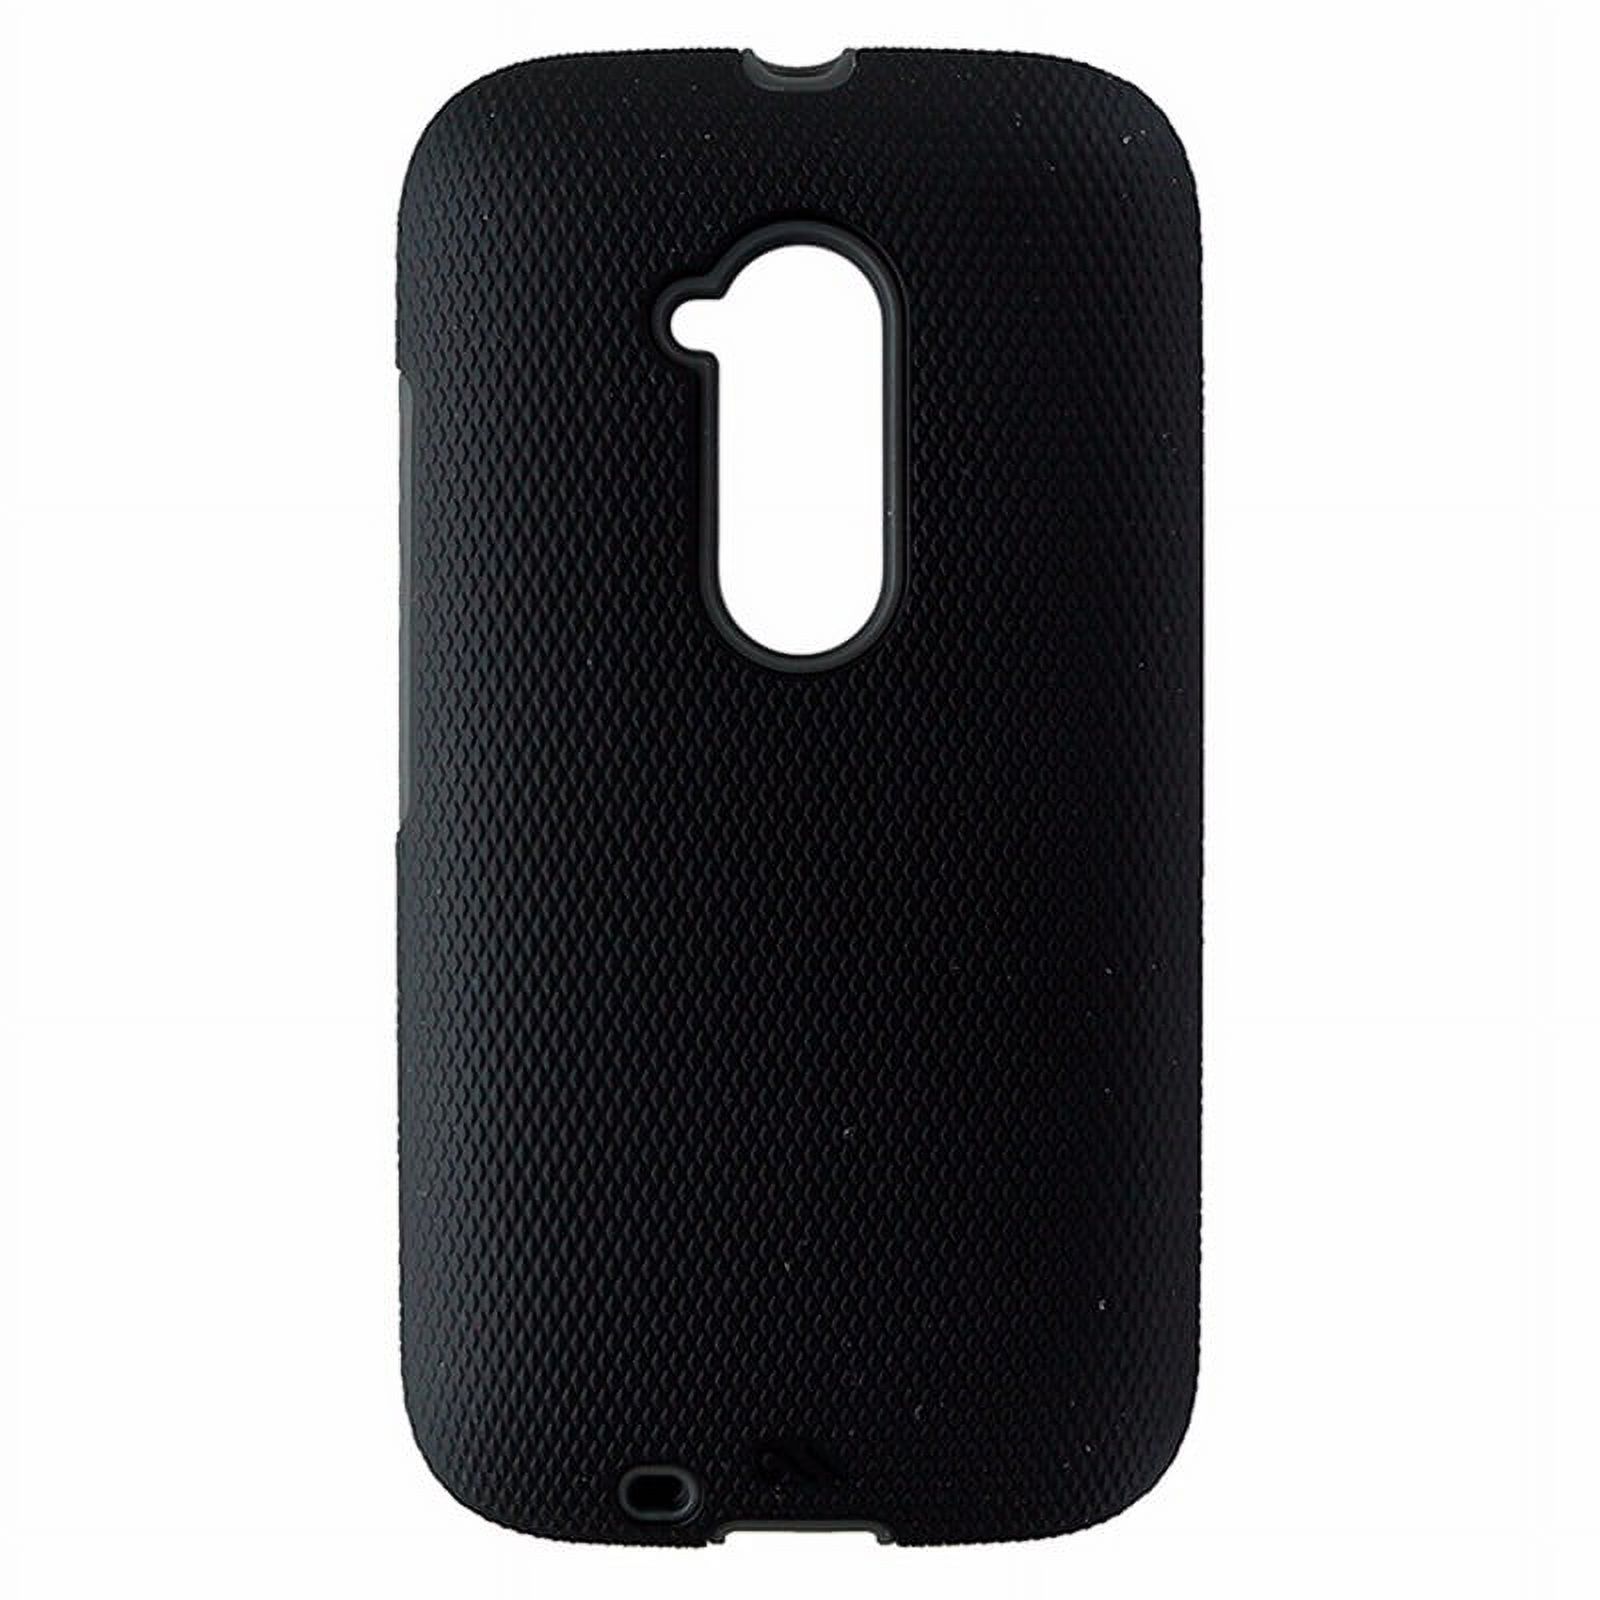 Case-Mate Tough Series Case for Motorola Moto E (2nd Generation) - Black / Gray - image 1 of 2